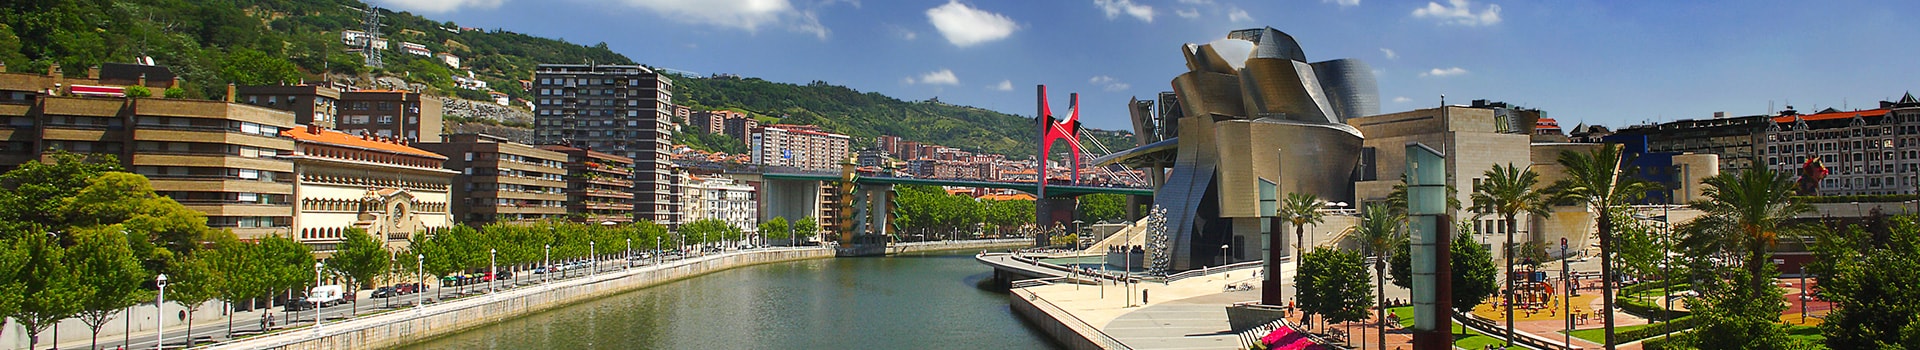 Santiago de Compostela - Bilbao